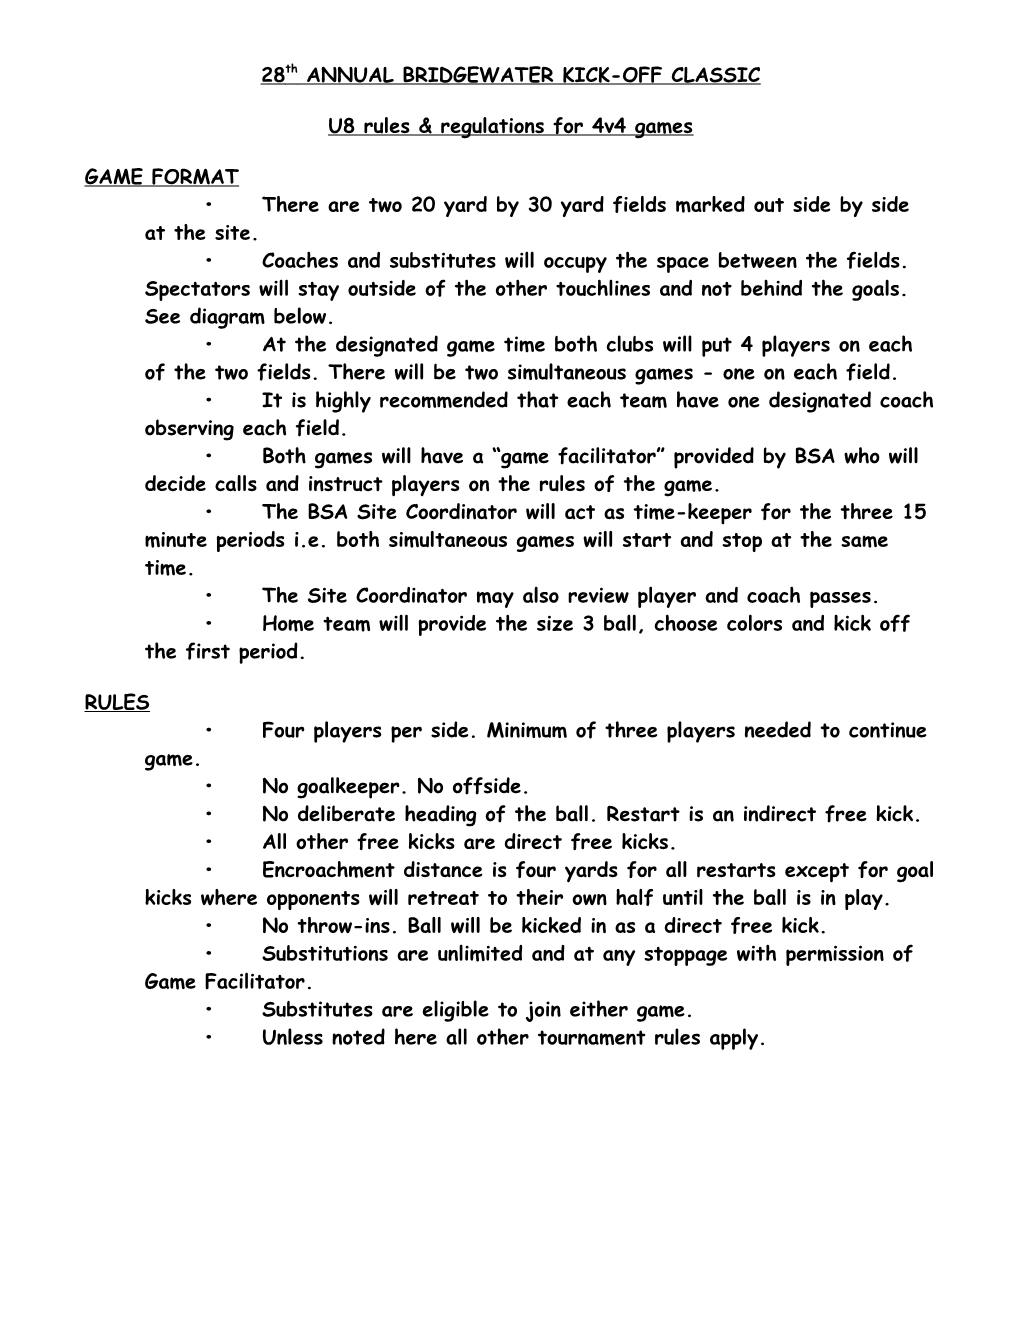 Rules of the 1997 Bridgewater Kick-Off Classic